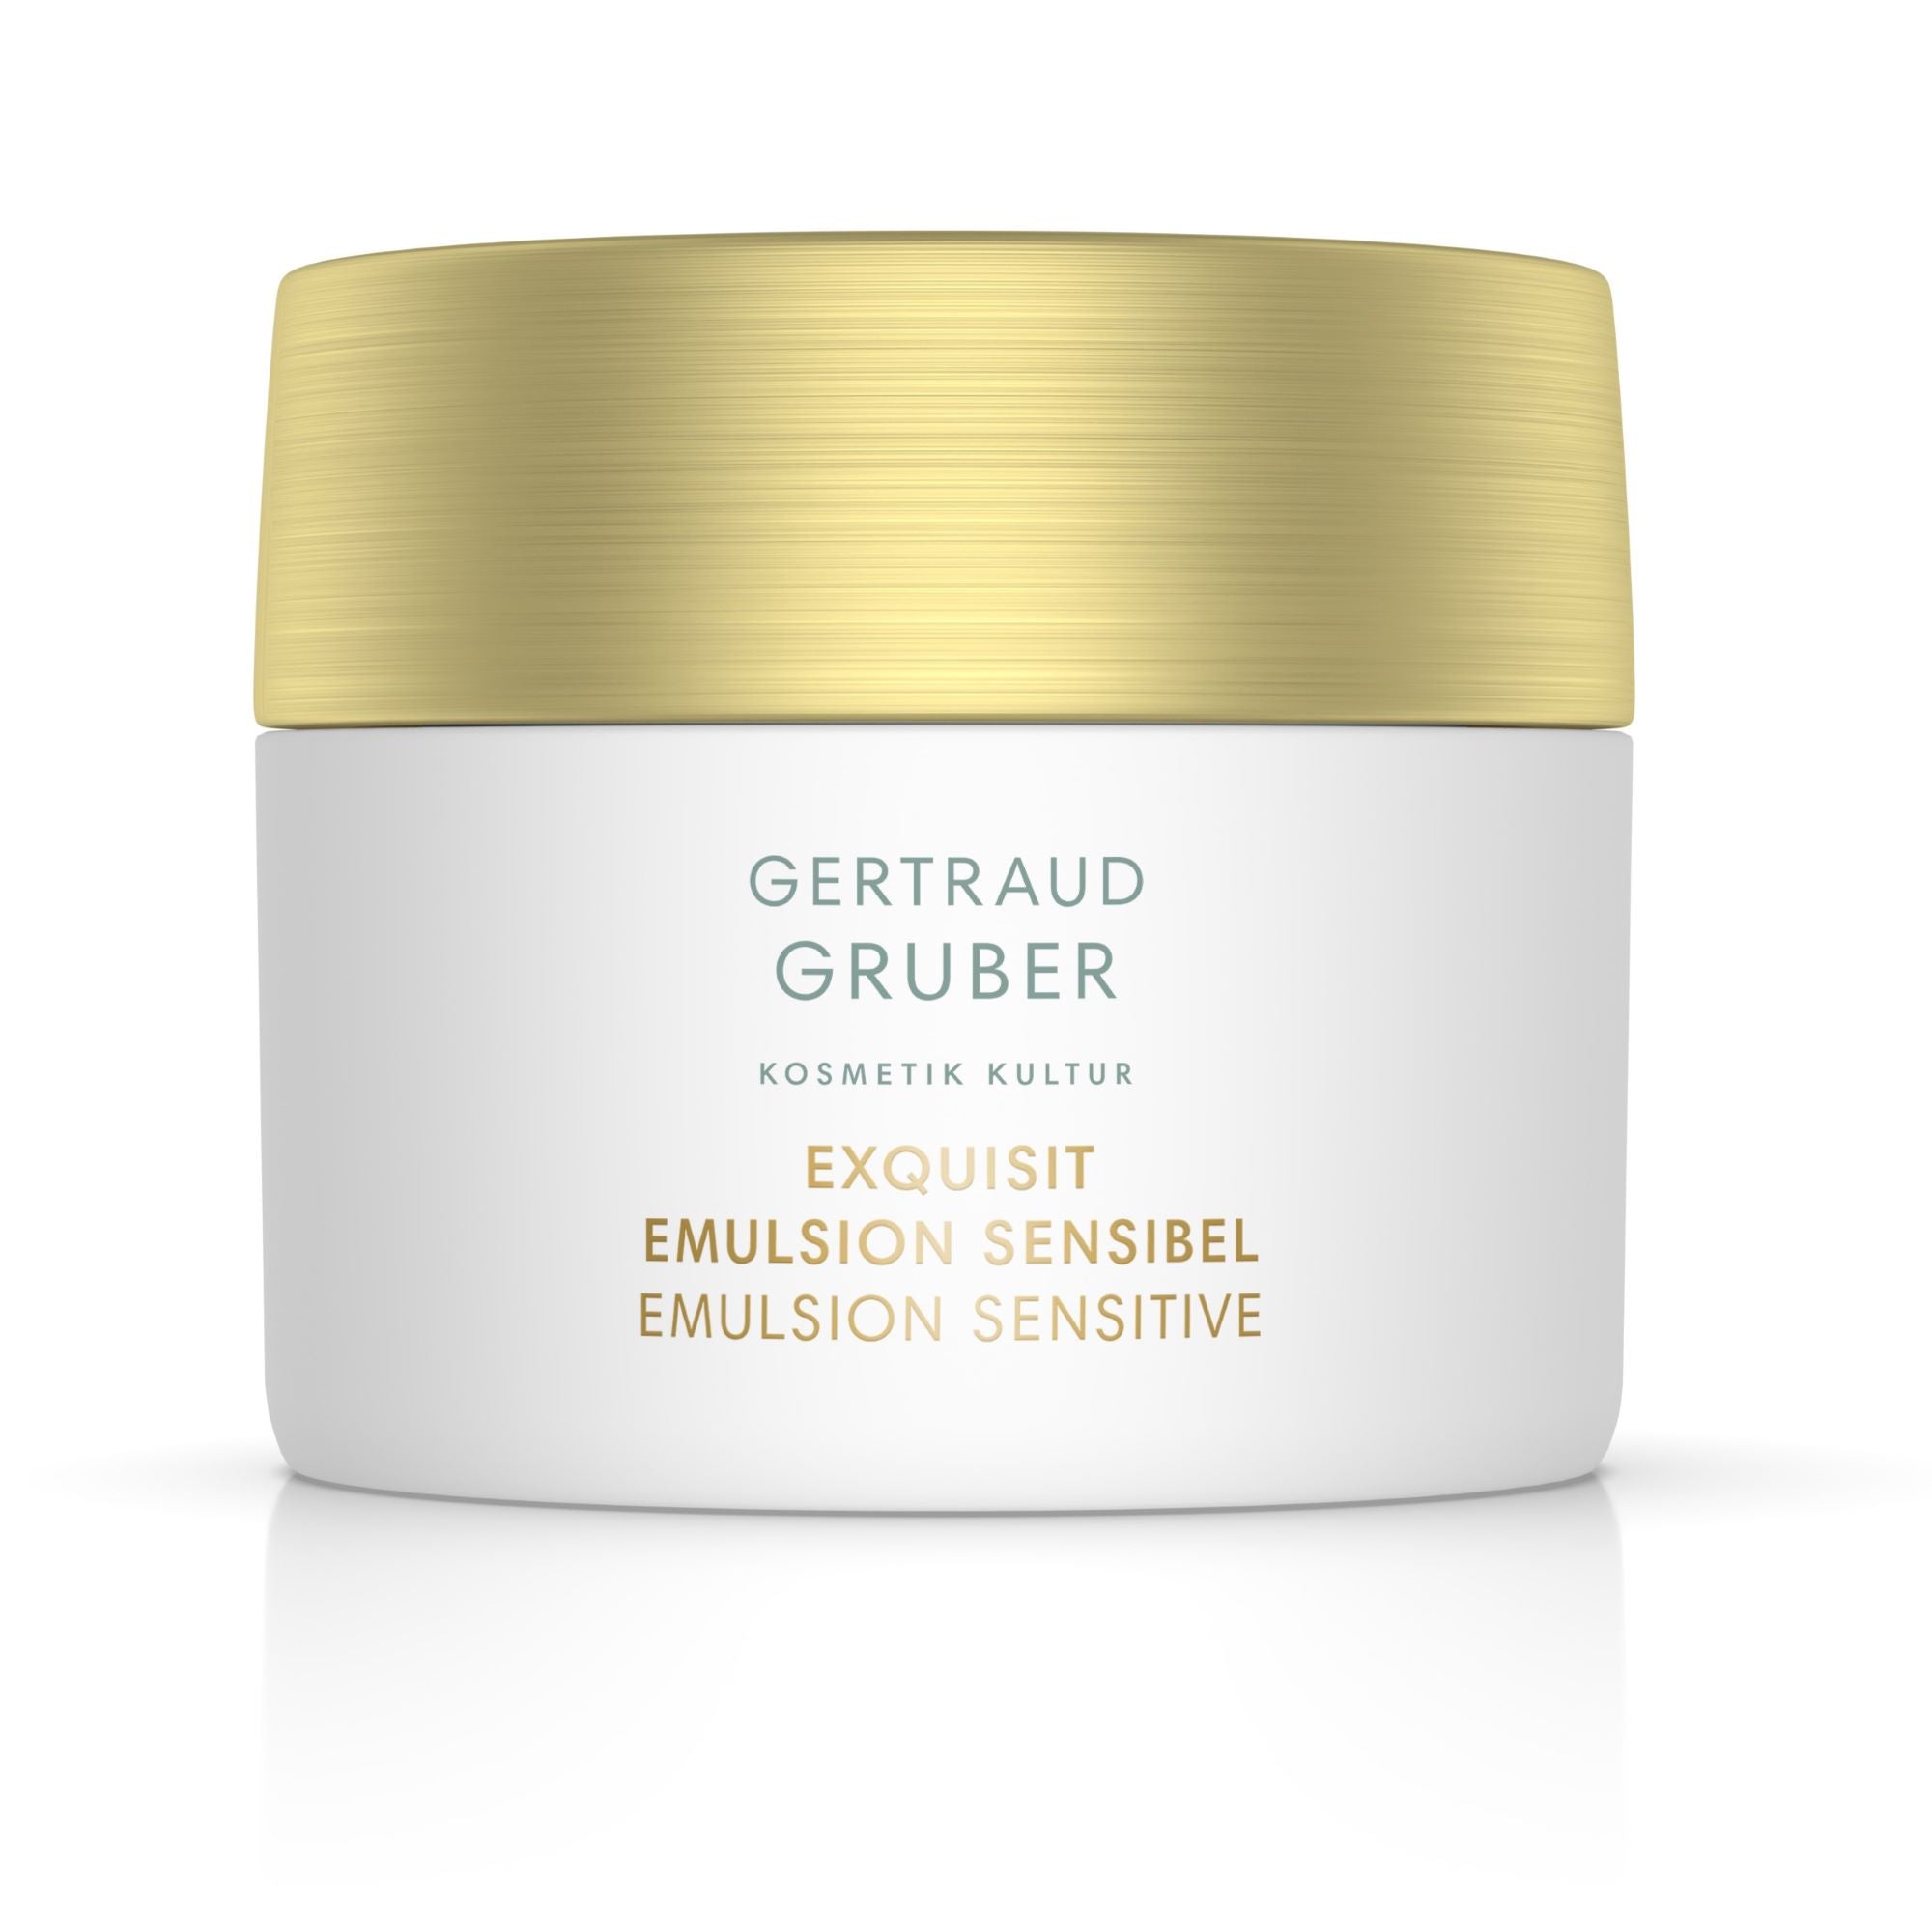 Gertraud Gruber EXQUISIT Emulsion sensibel (50ml)